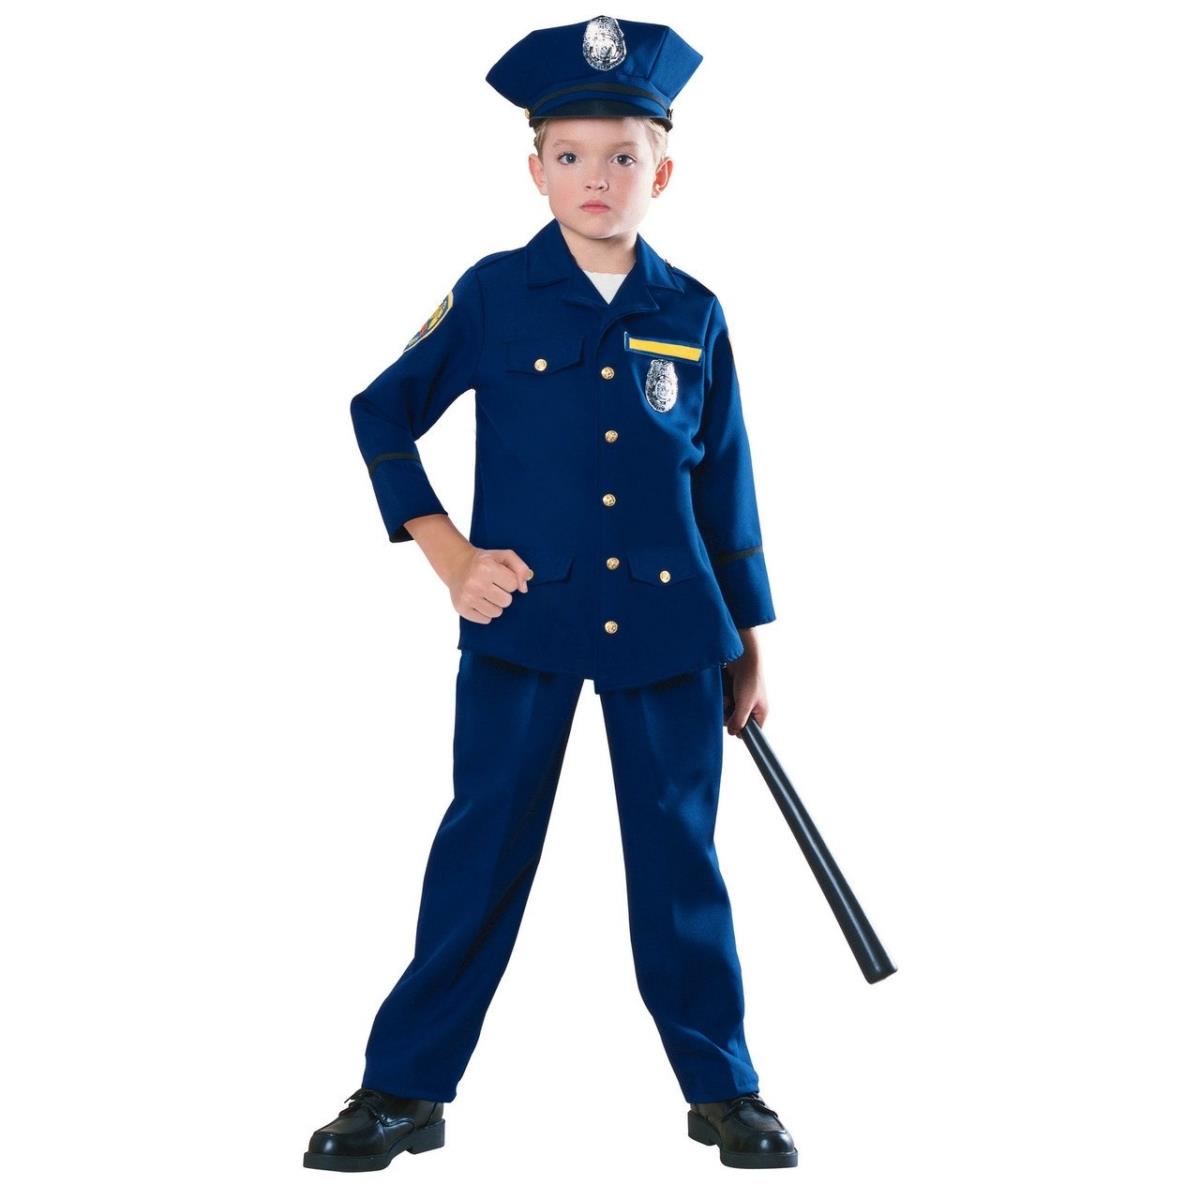 286777 Kids Police Officer Costume, Large